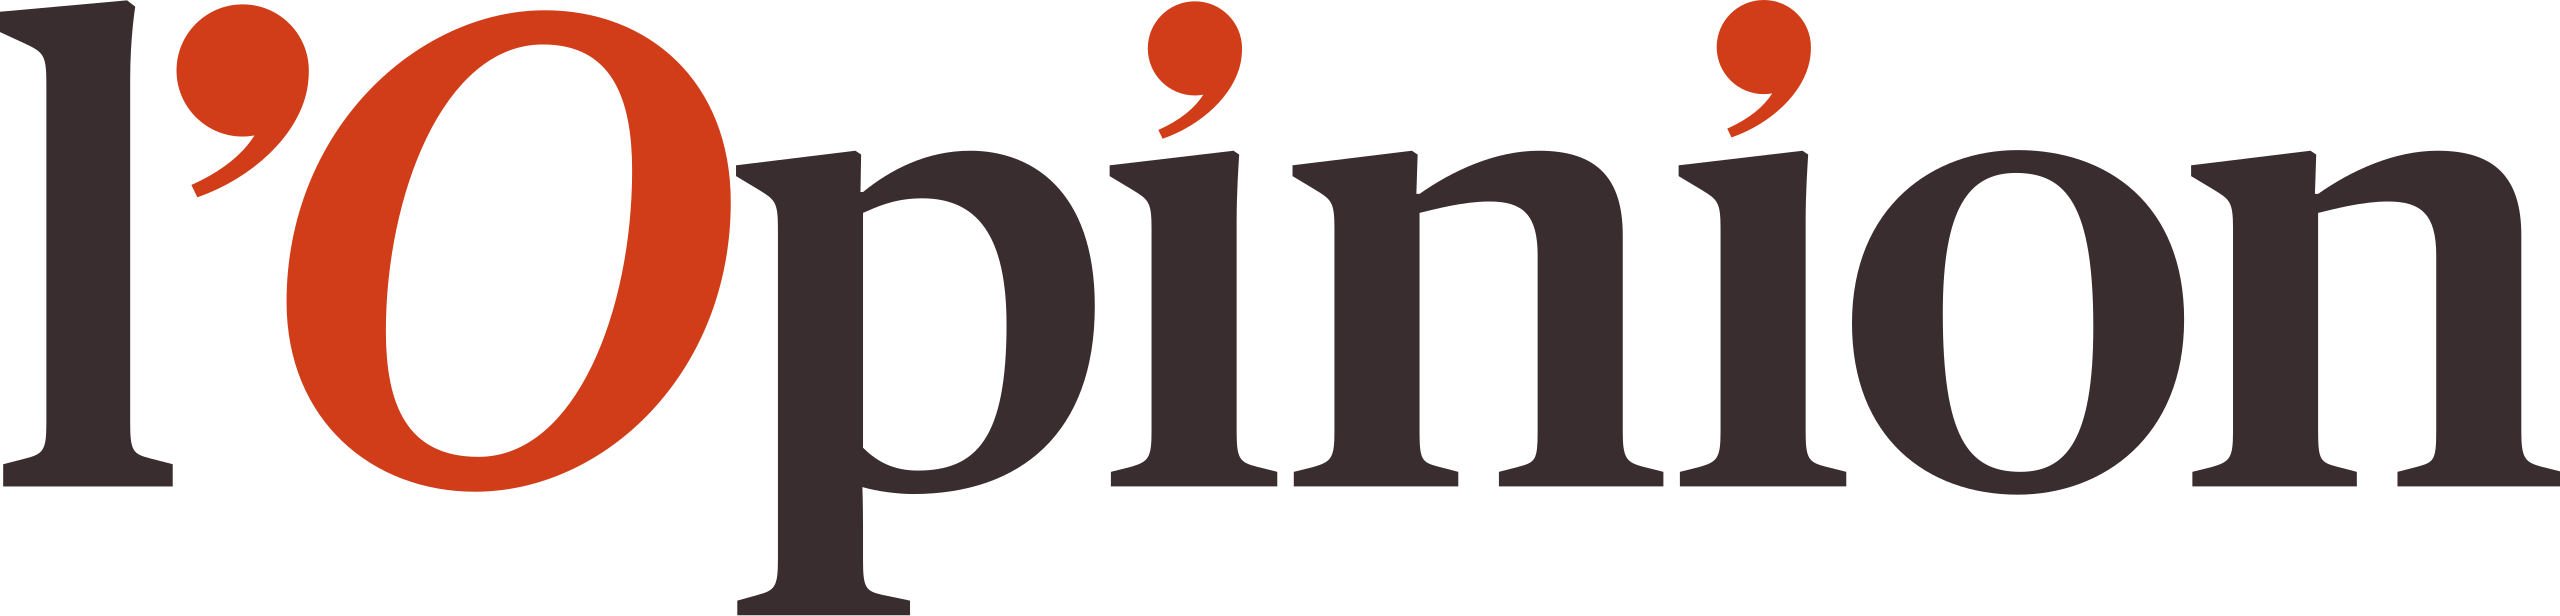 opinion logo